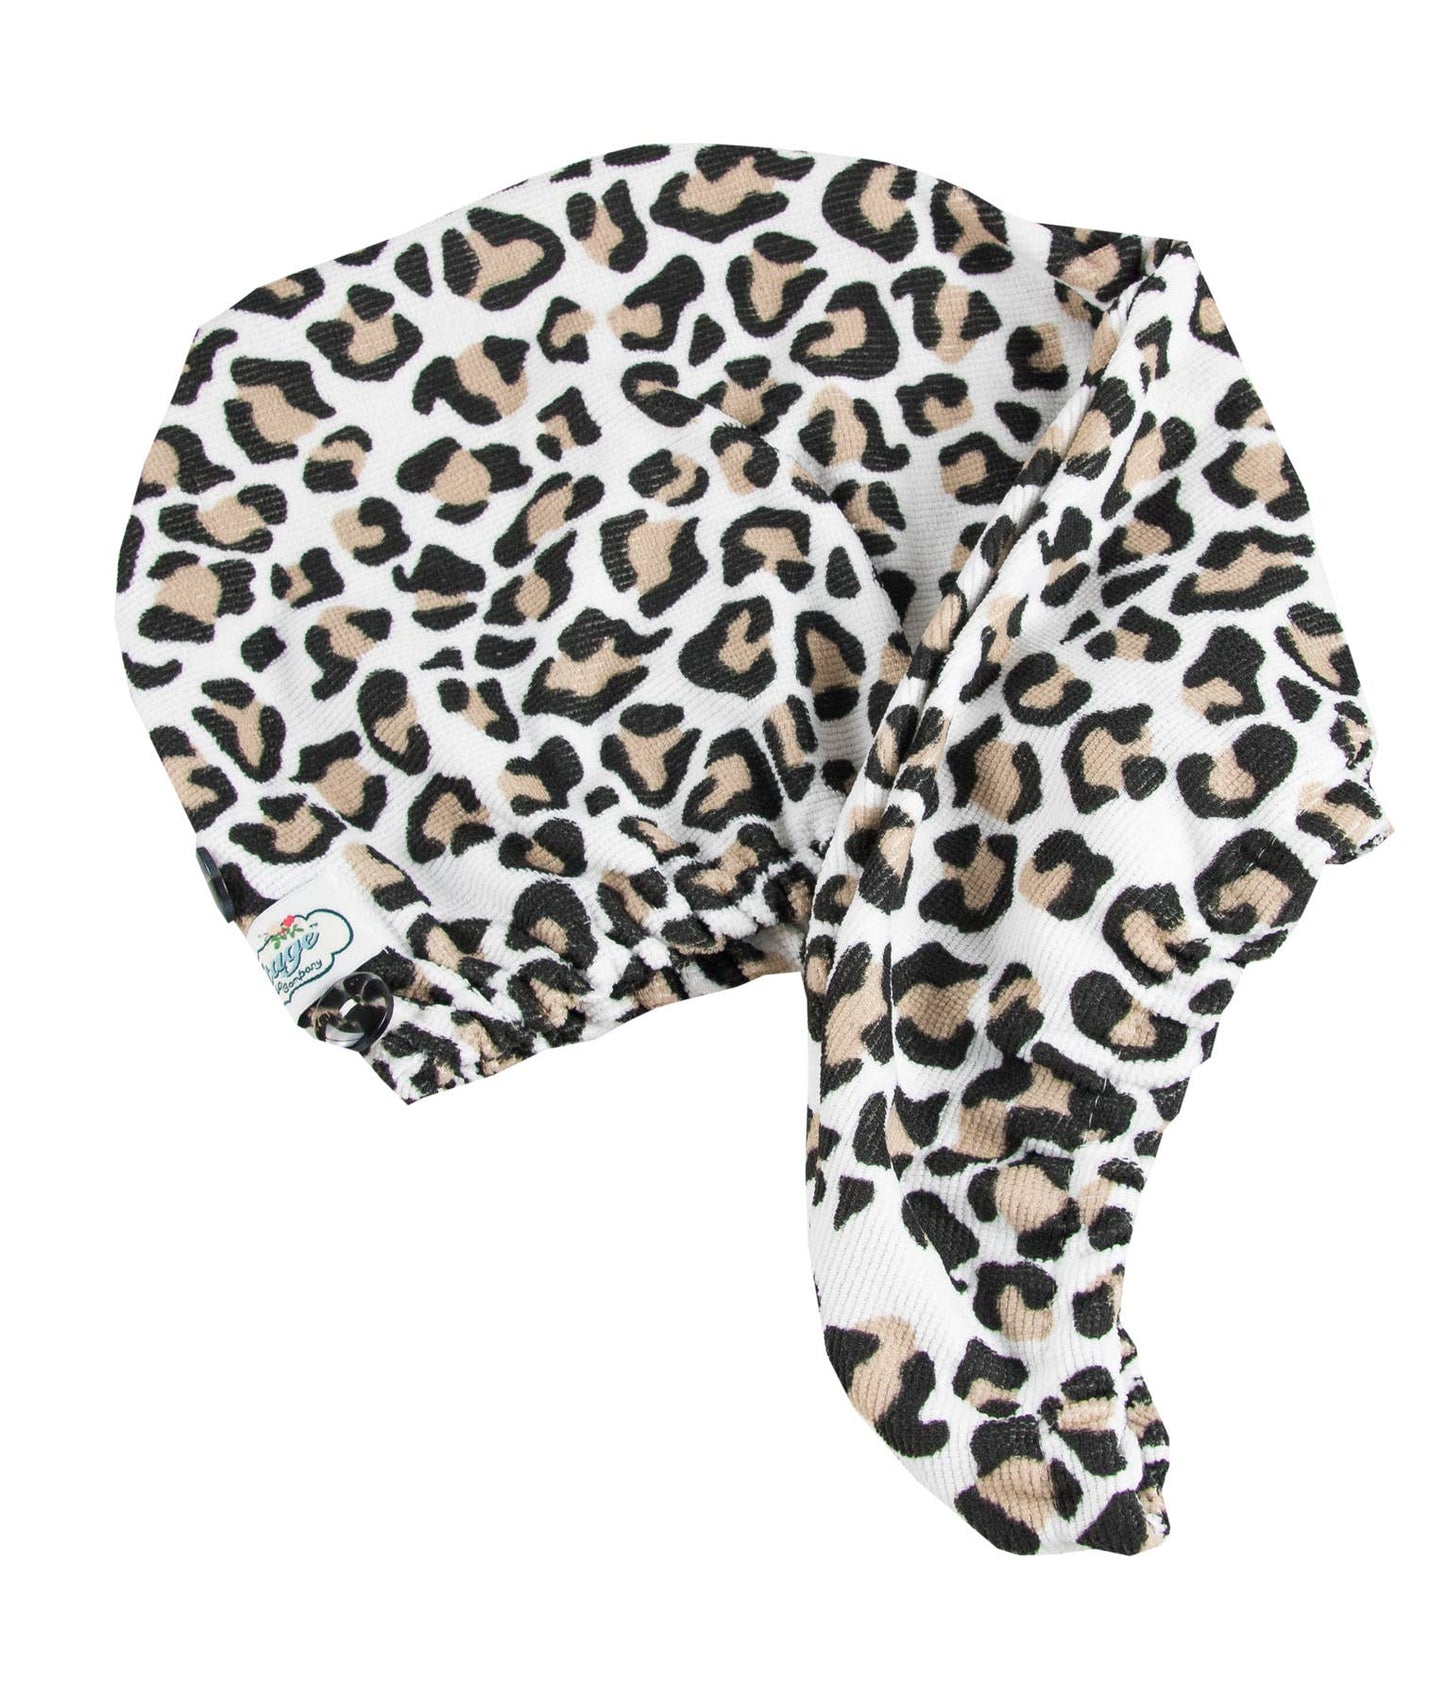 Absorbent Microfibre Hair Towel / Wrap in Leopard Print